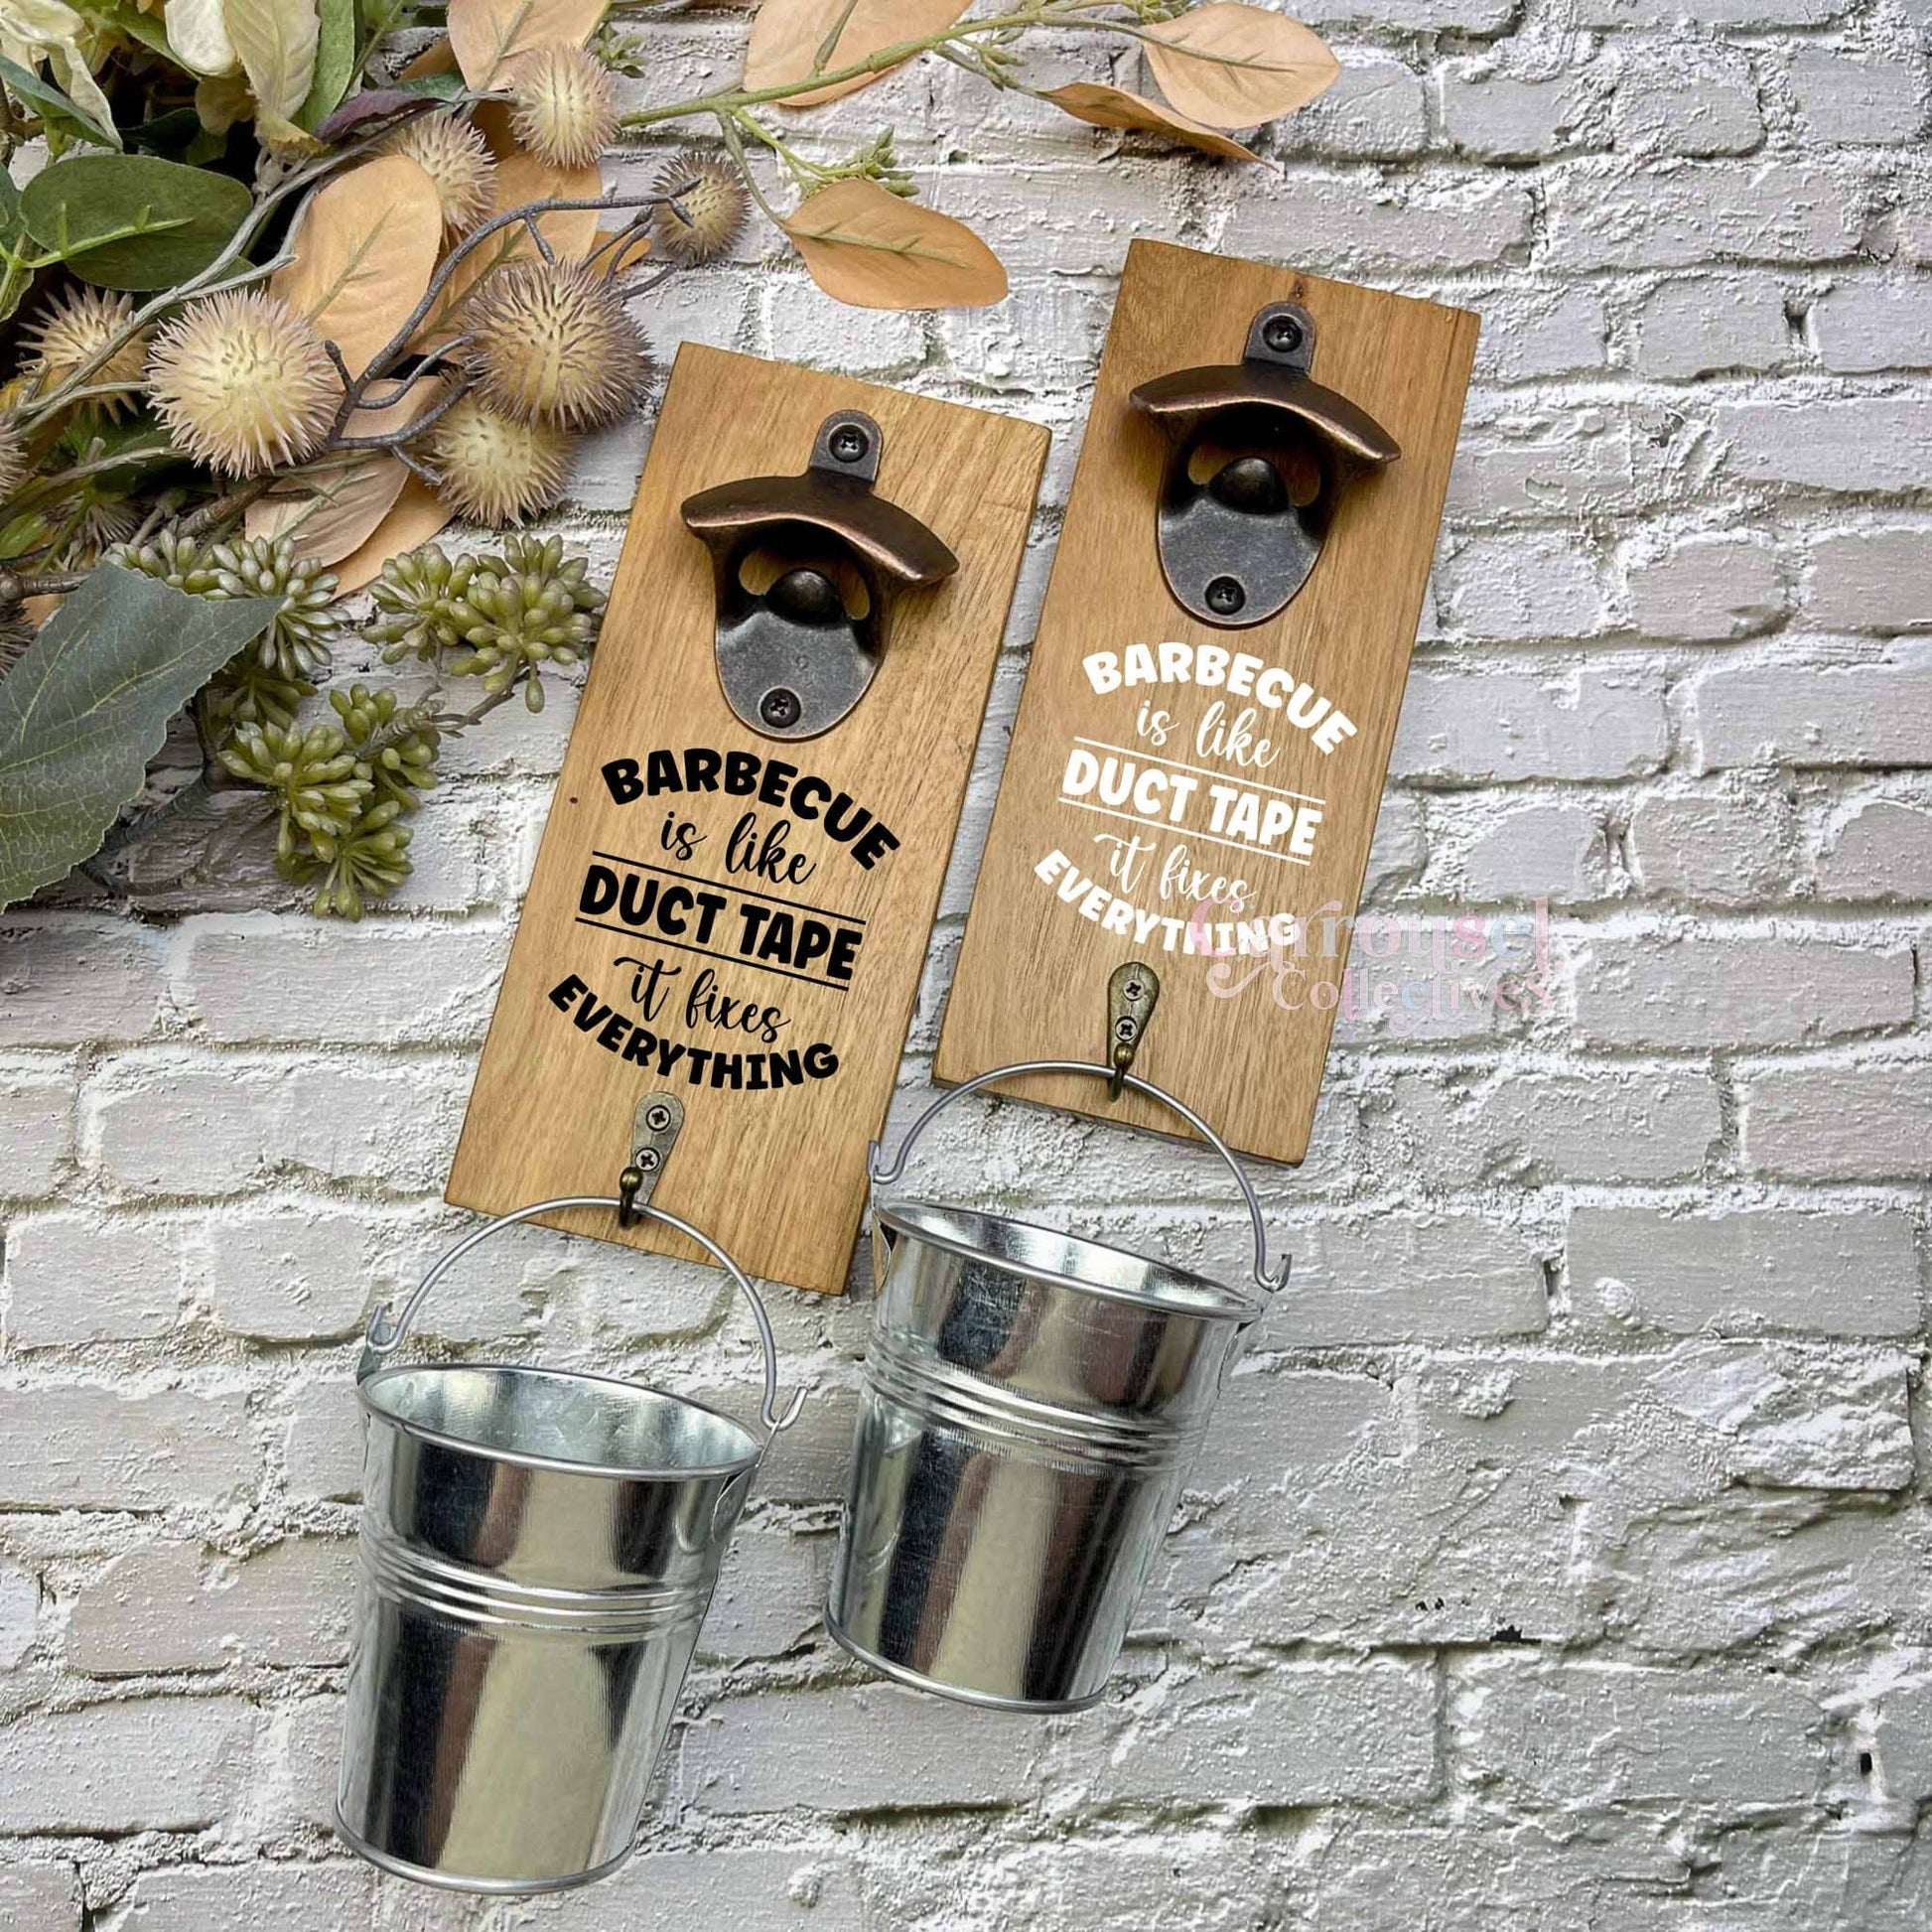 Duct tape fixes everything bottle opener sign, Australian ironbark hardwood sign